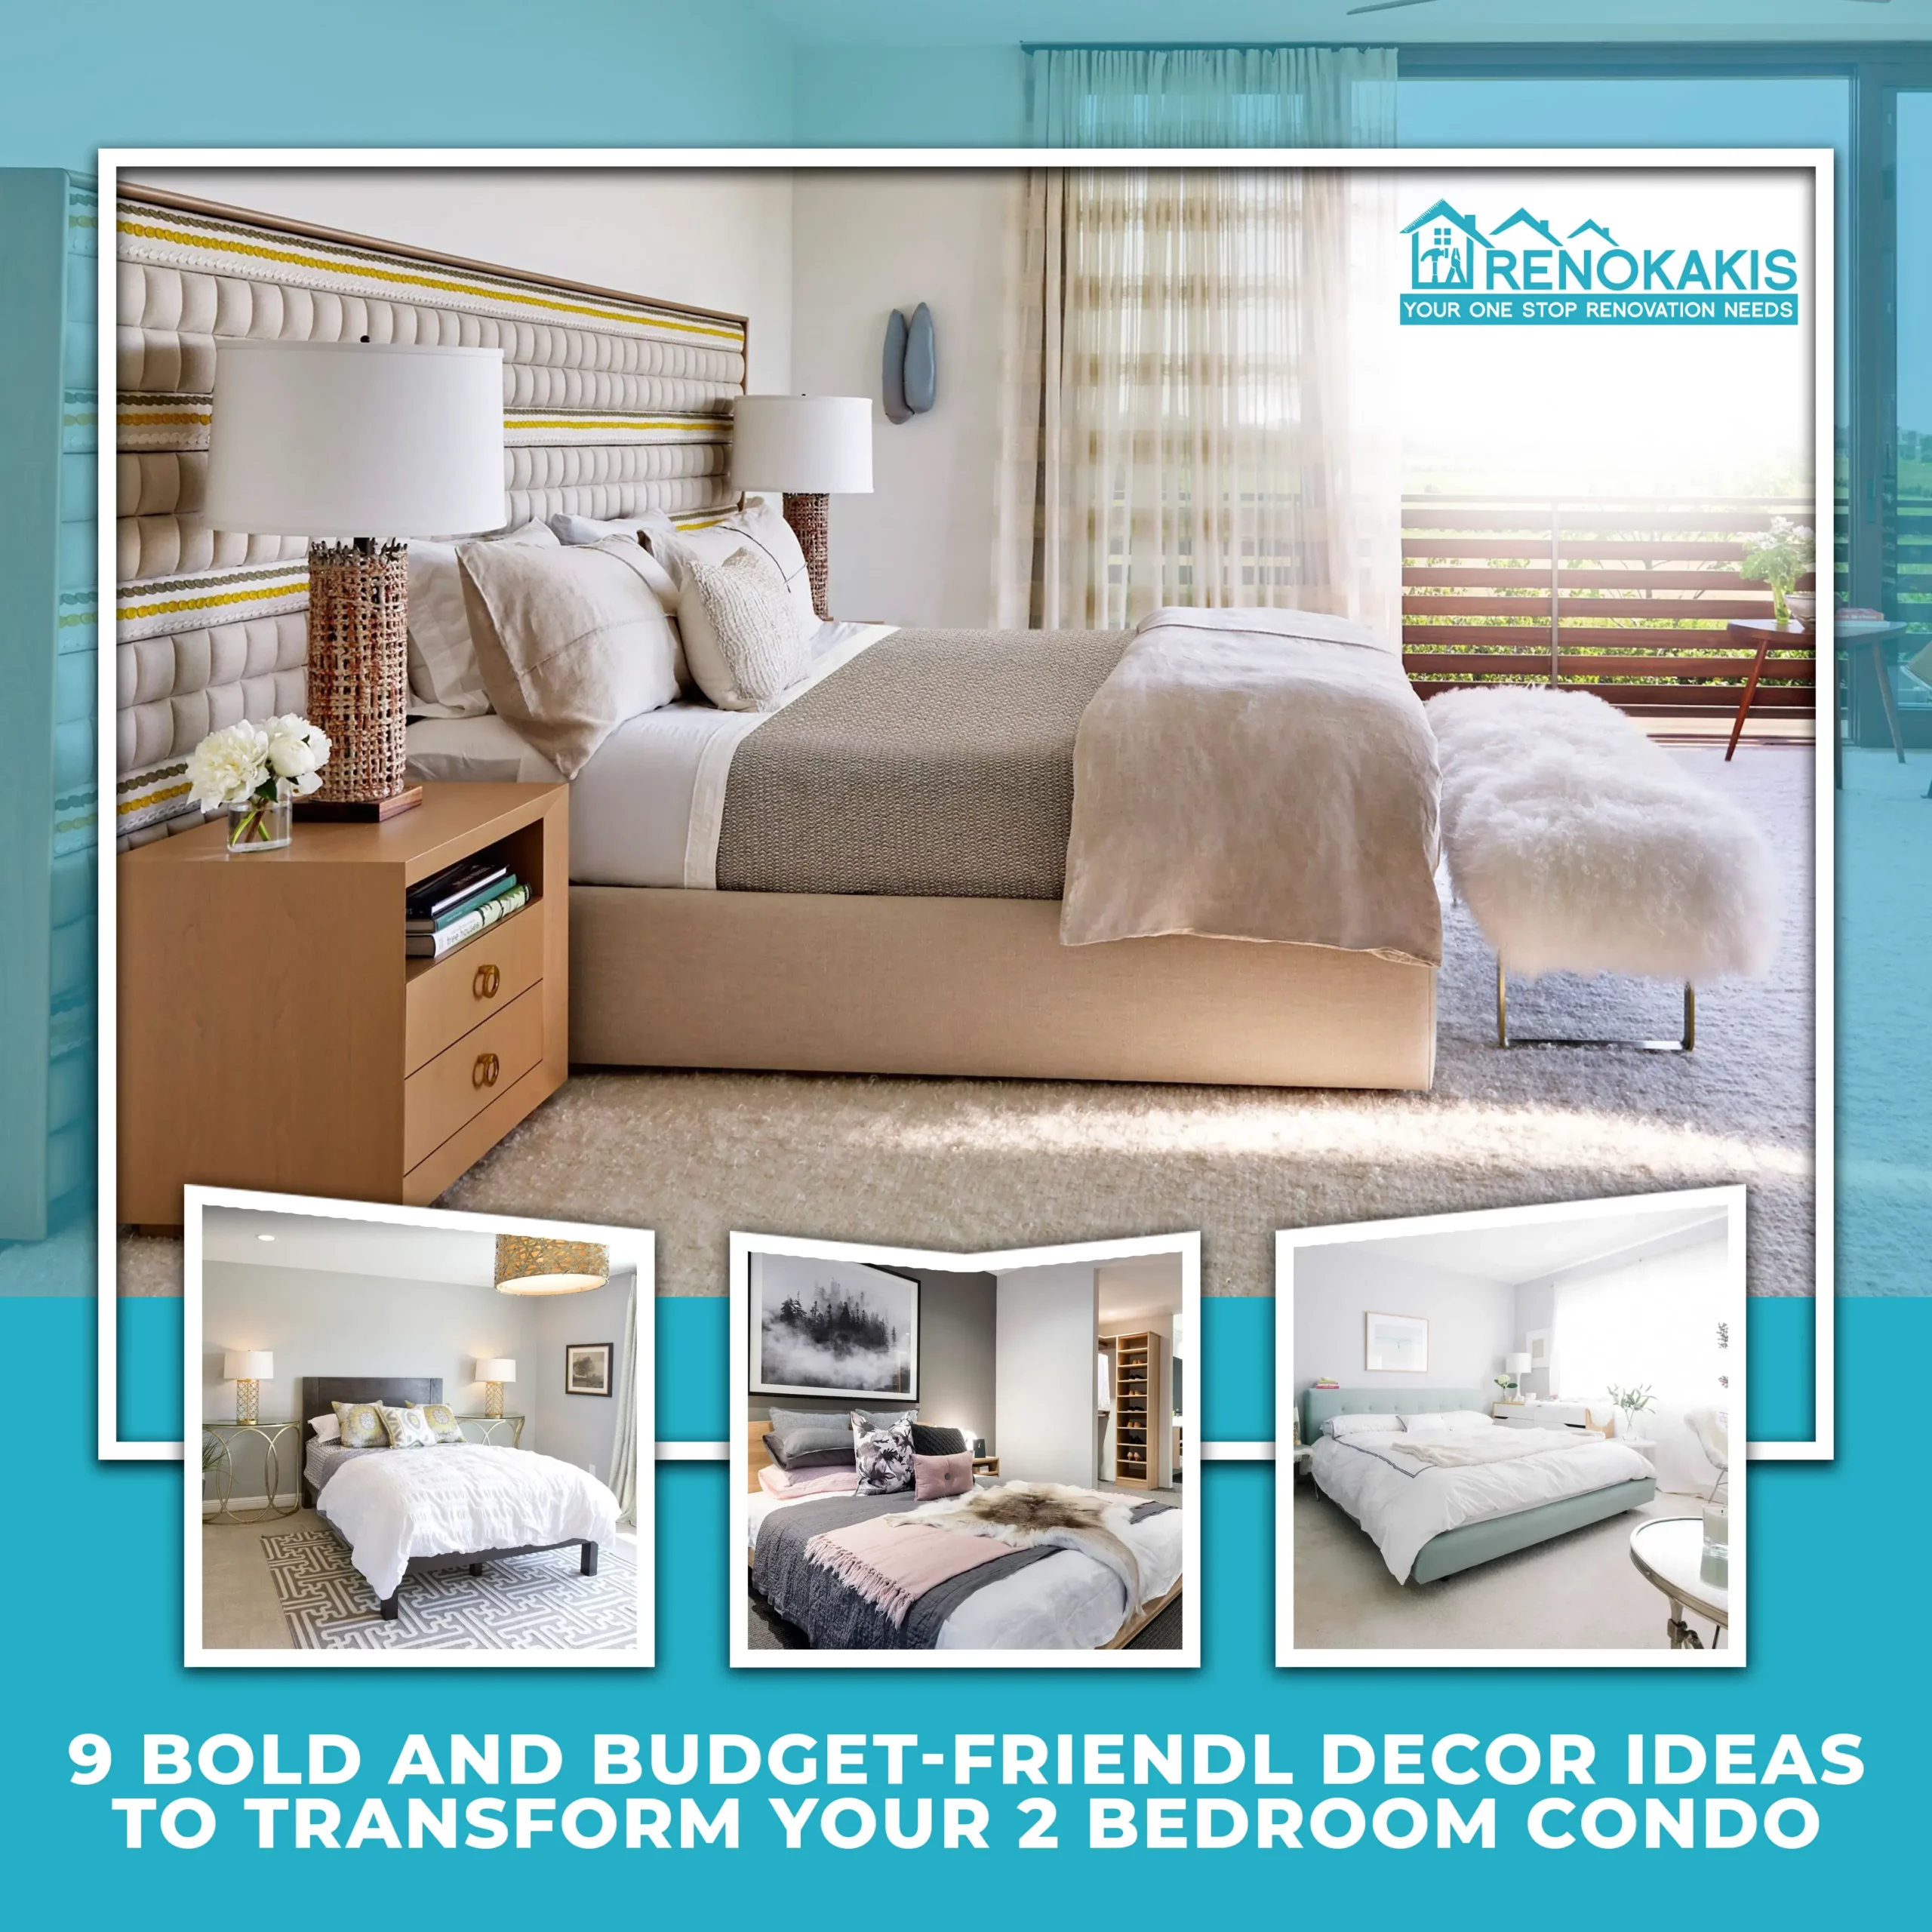 9 Bold and Budget-Friendly Decor Ideas to Transform Your 2 Bedroom Condo